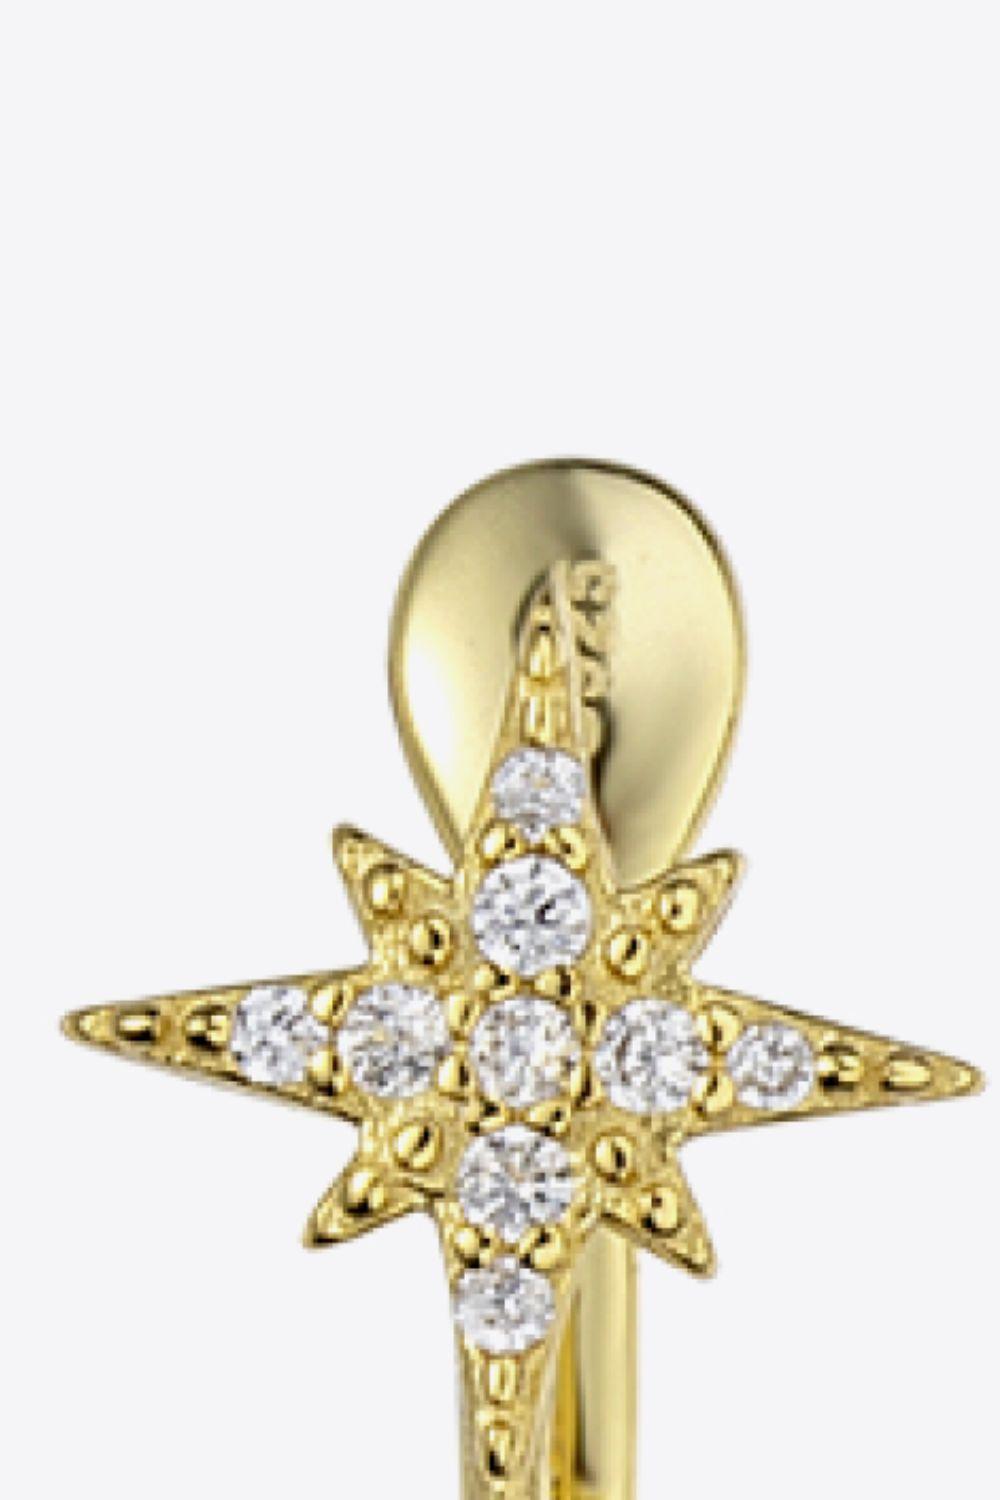 Unfading Inlaid Zircon Gold-Plated Cuff Single Earring - MXSTUDIO.COM